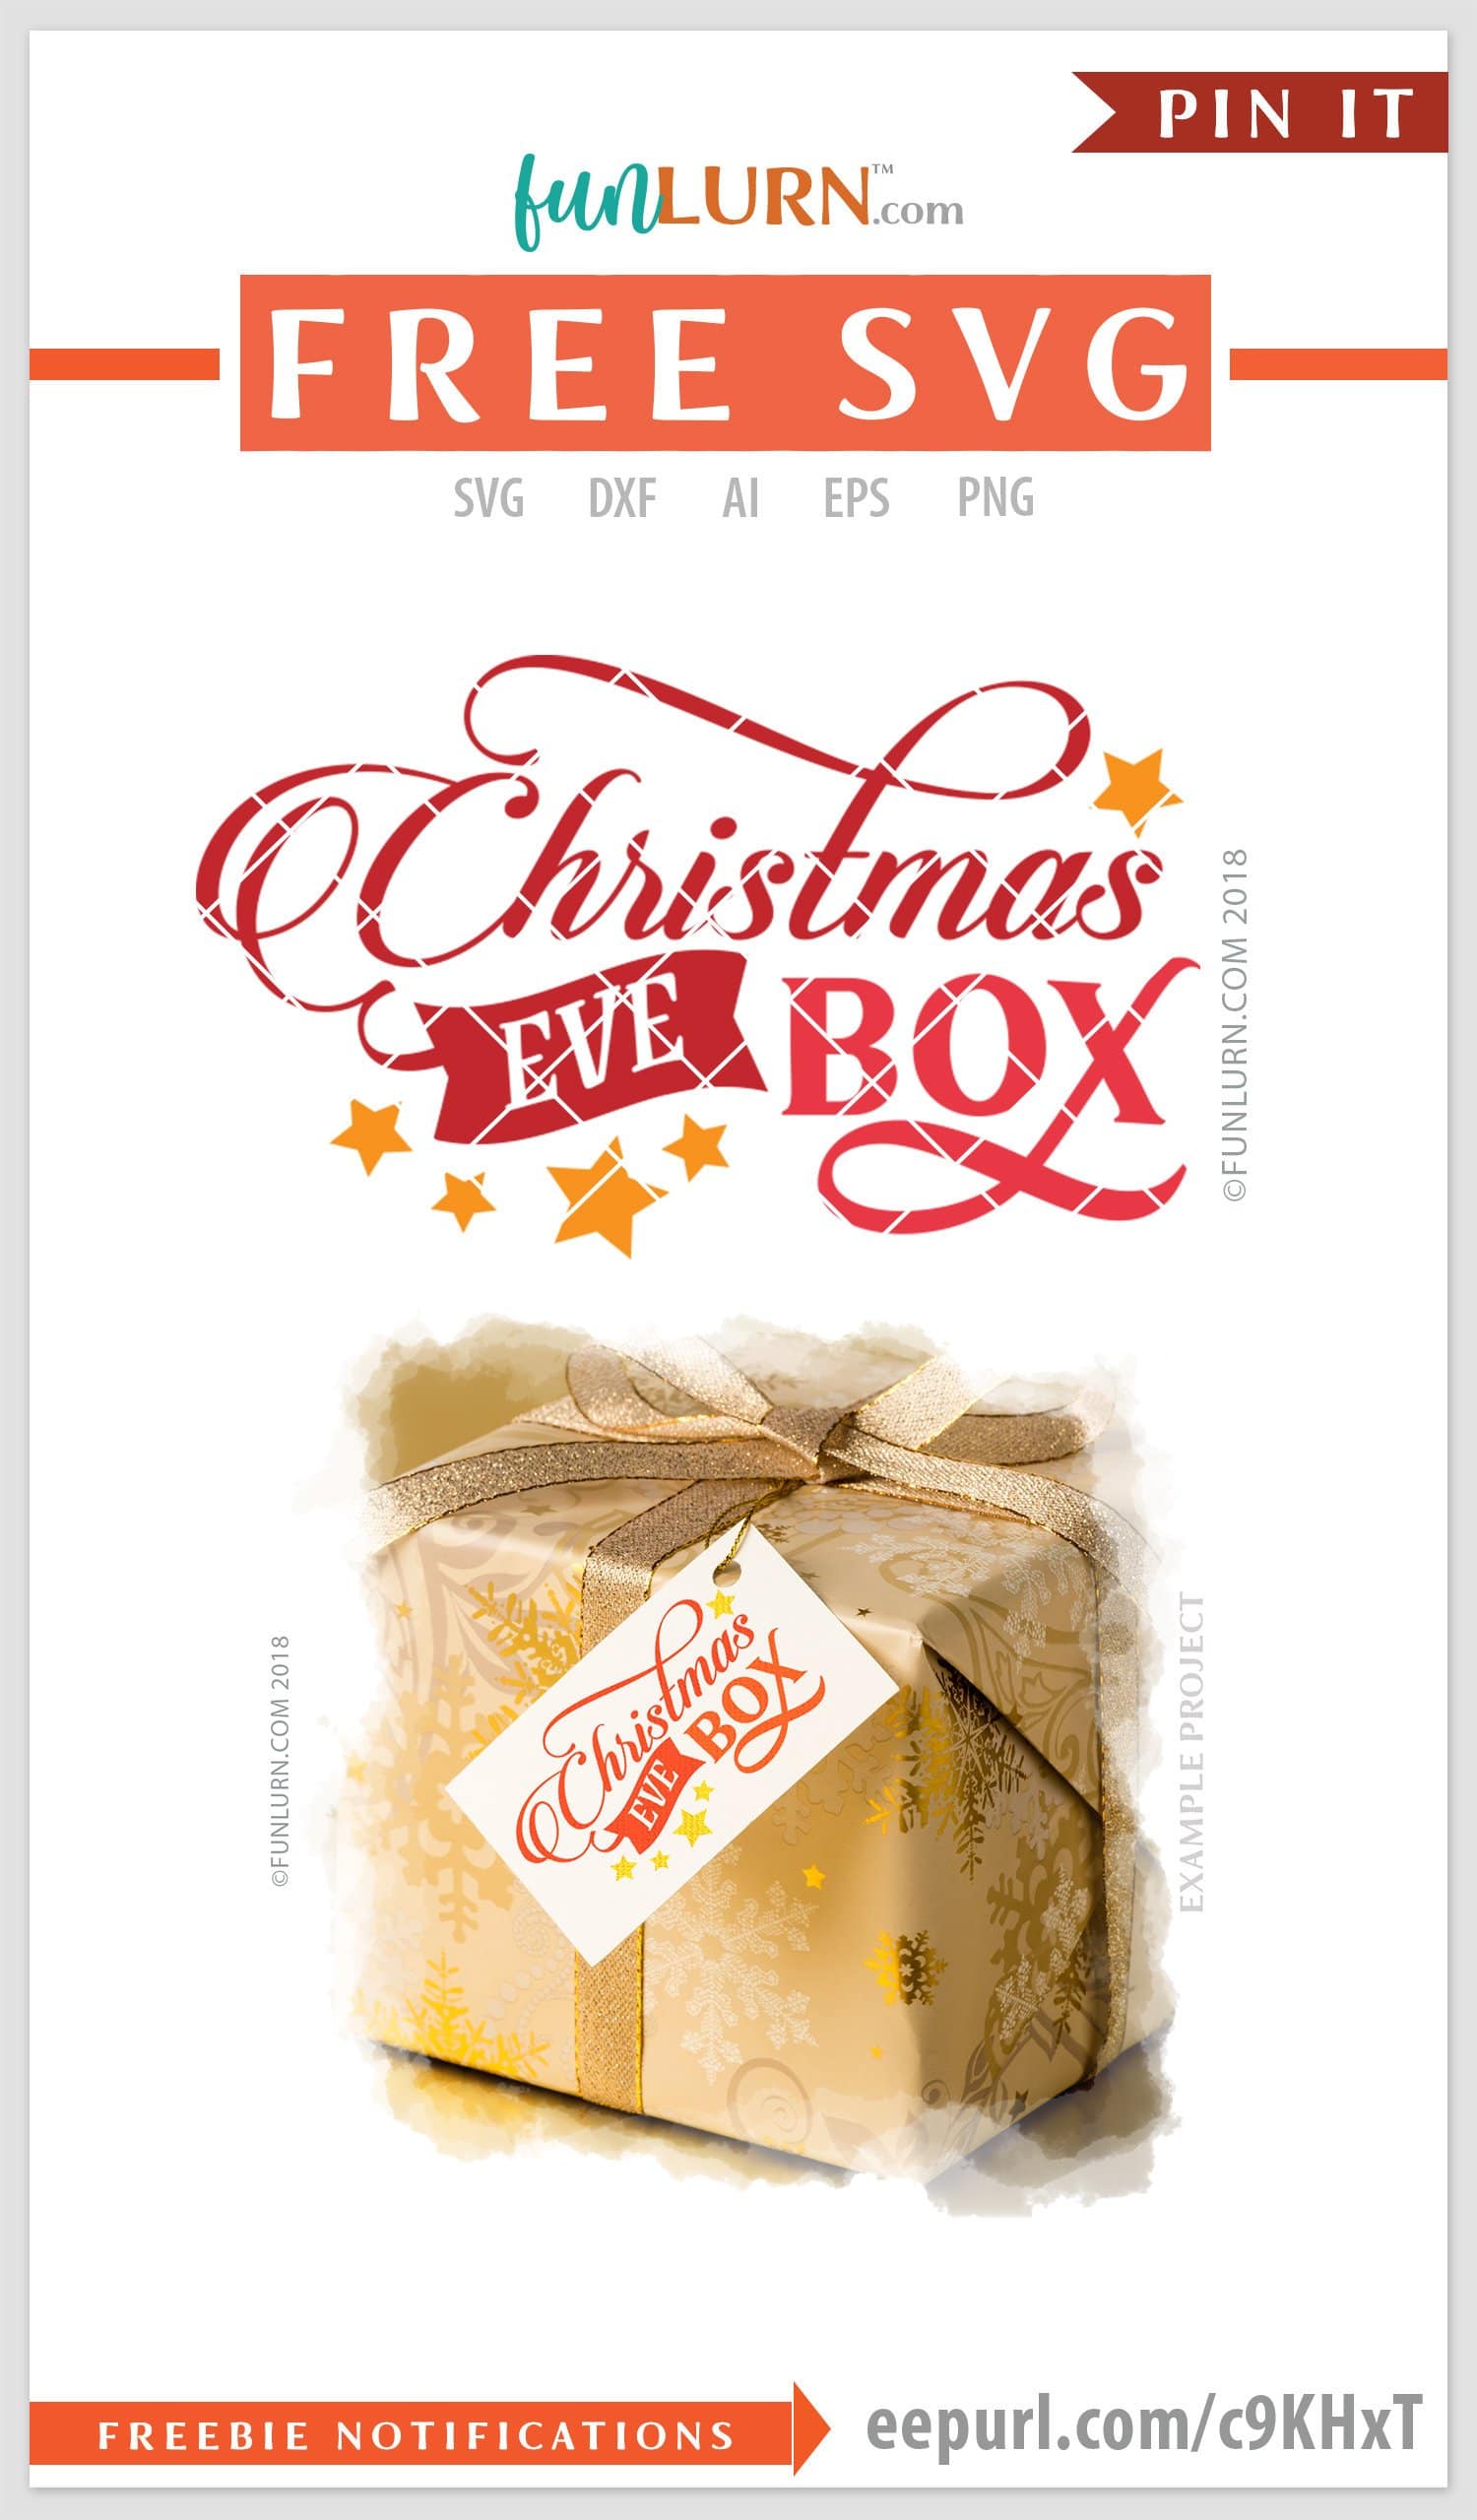 Download Christmas Eve Box Svg Free Funlurn